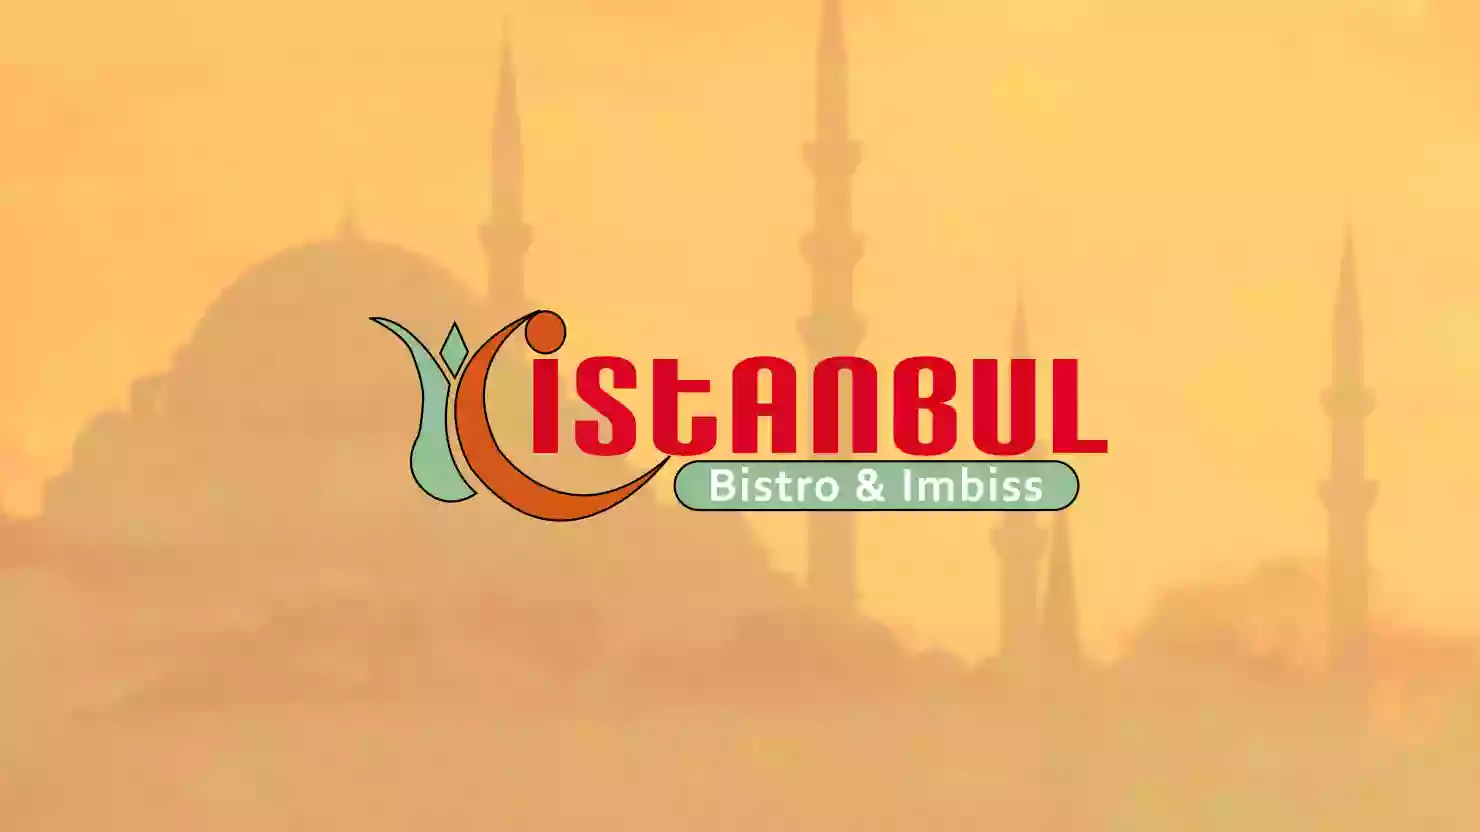 Bistro & Imbiss Istanbul